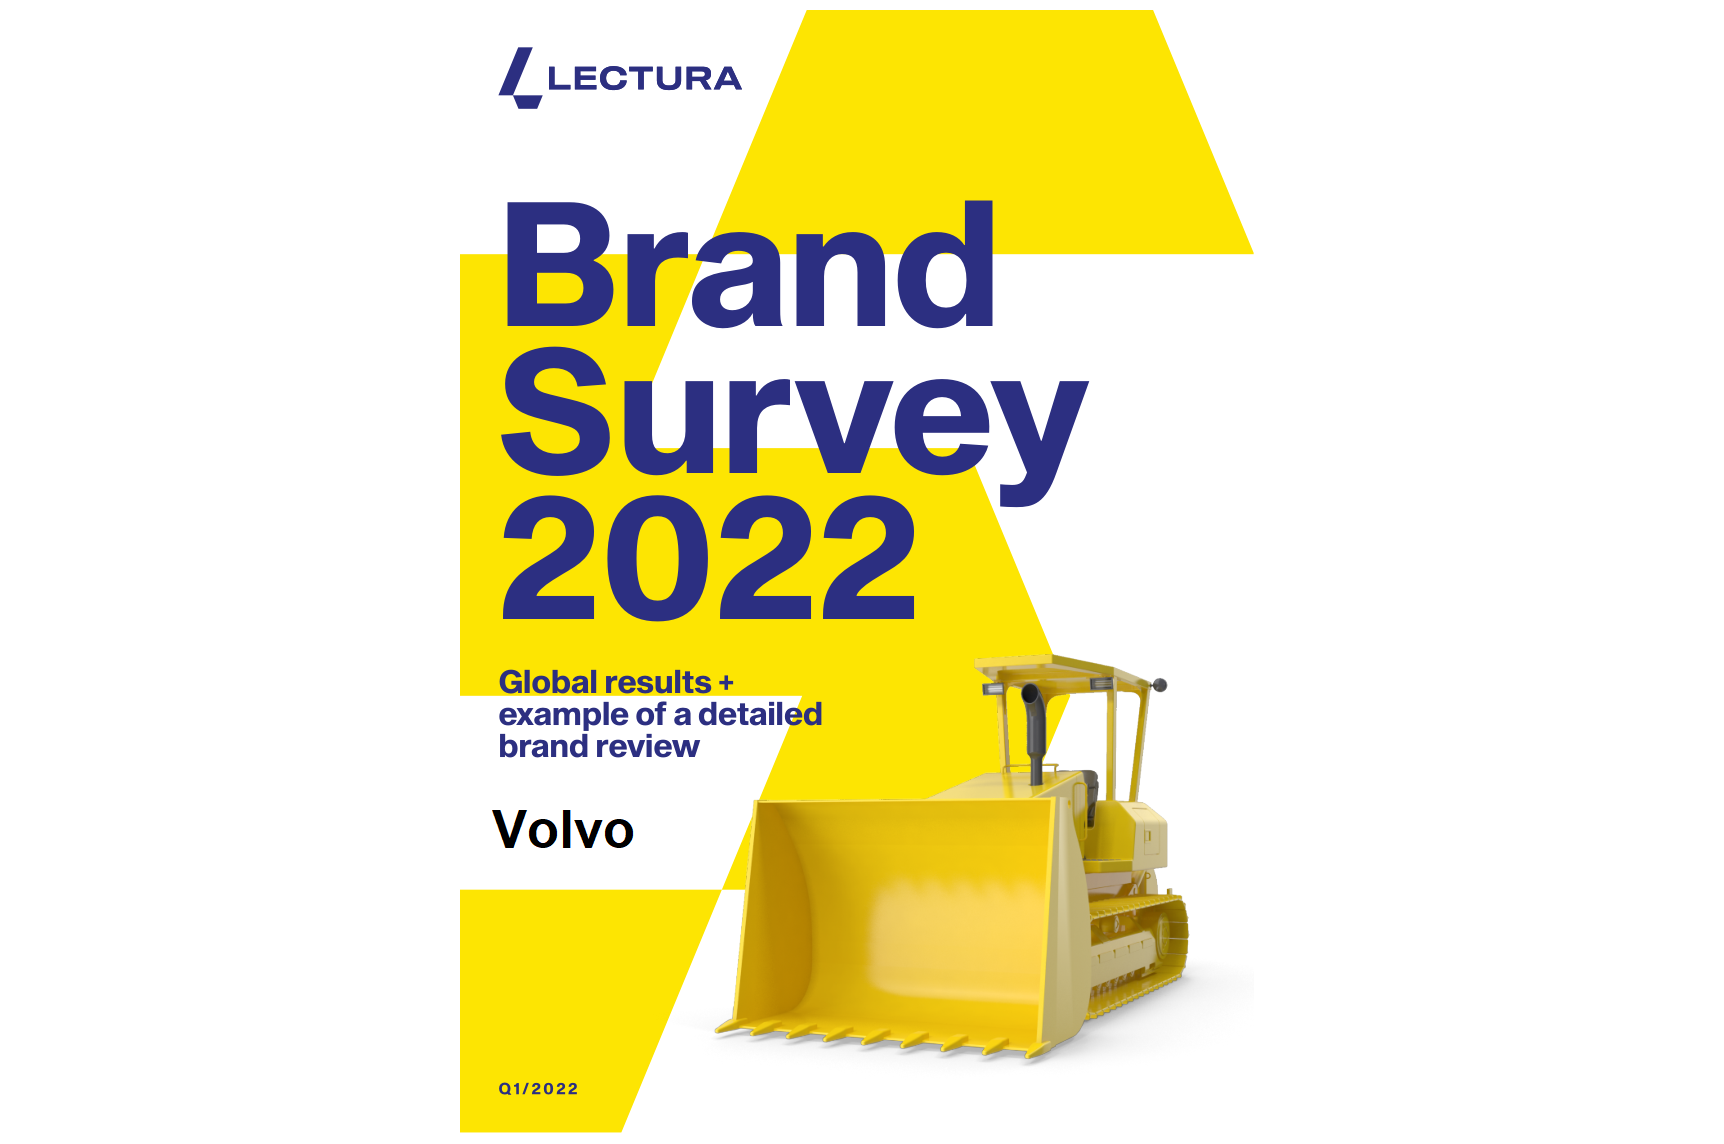 BrandSurvey 2022 Sneak Peak: Volvo